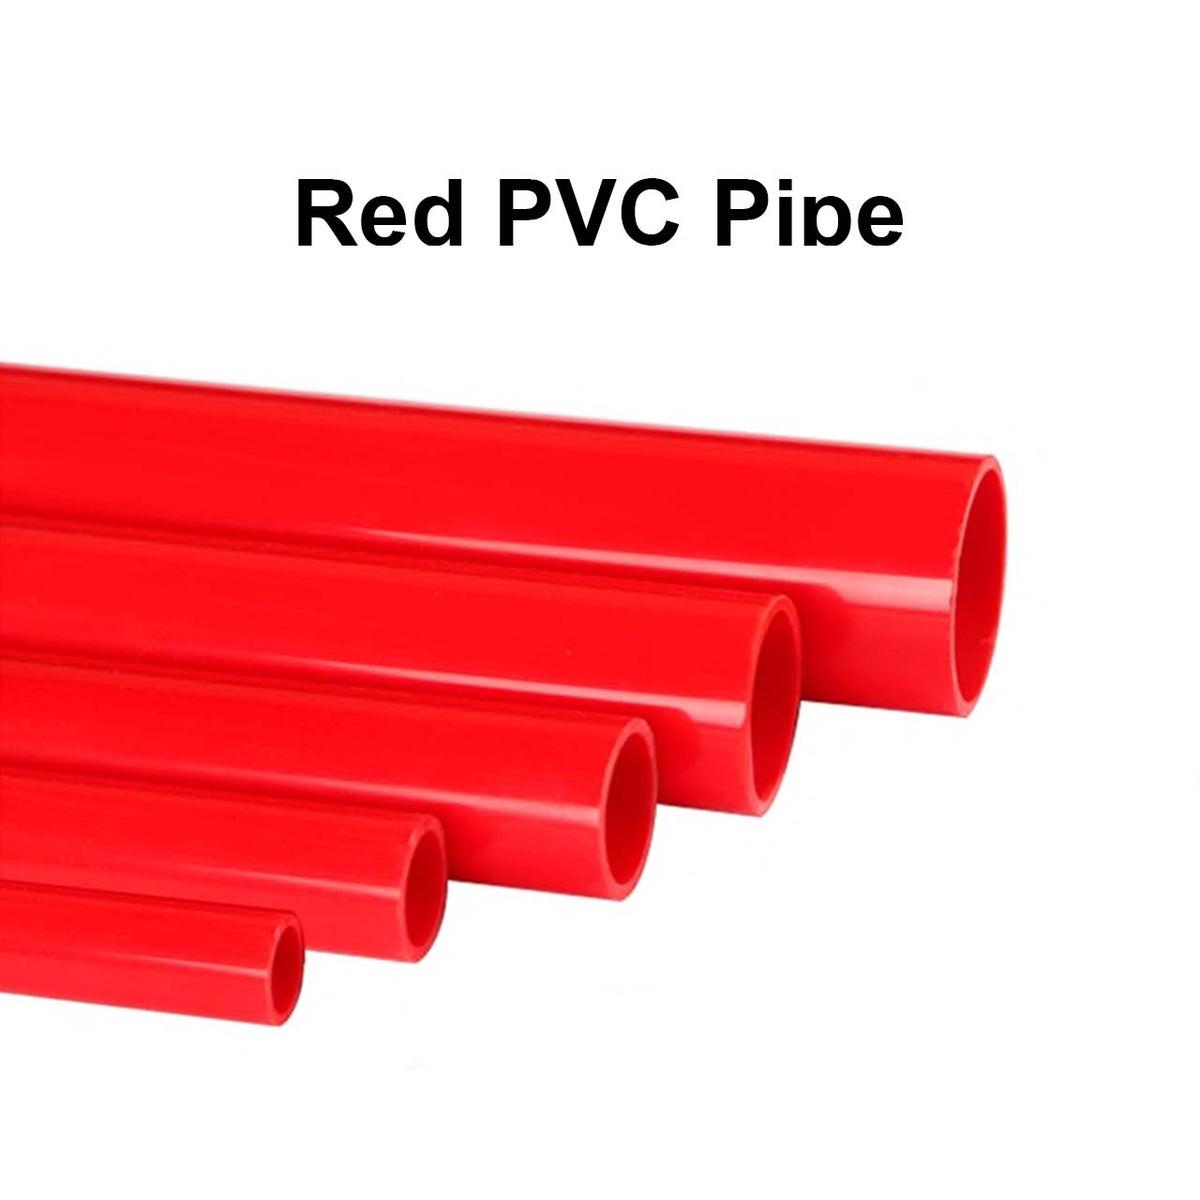 DIN Red PVC Pipe